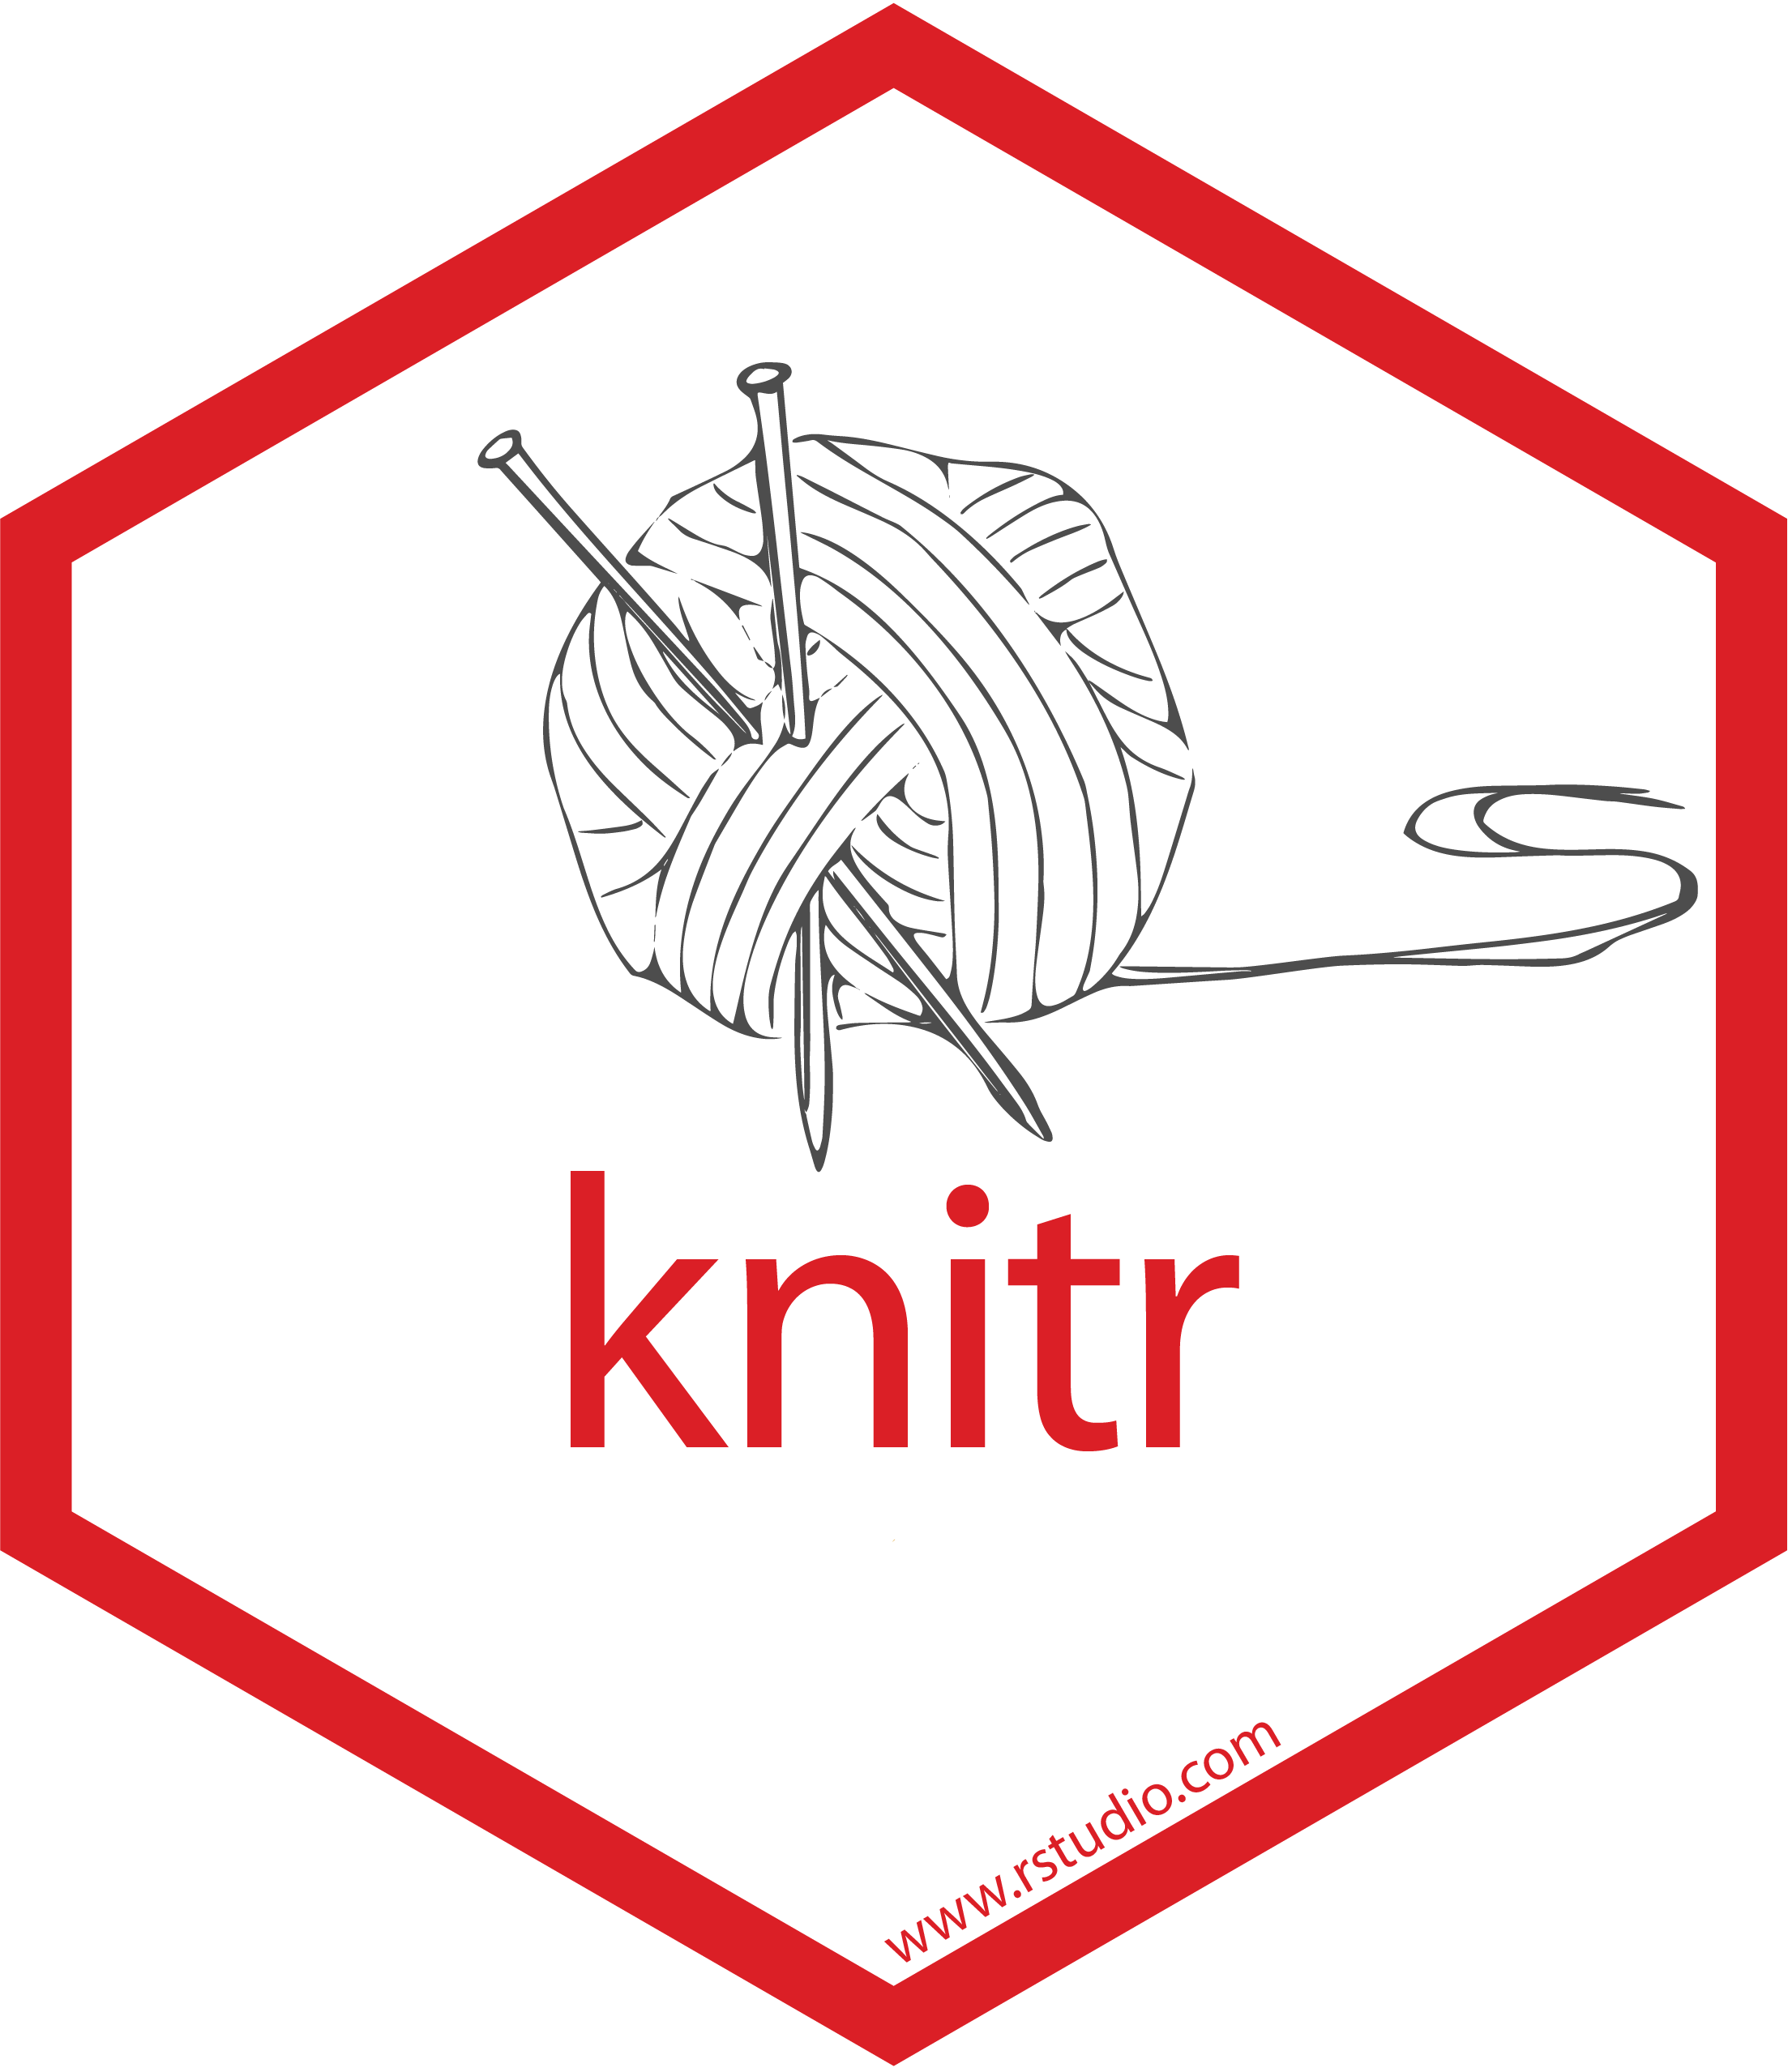 knitr sticker